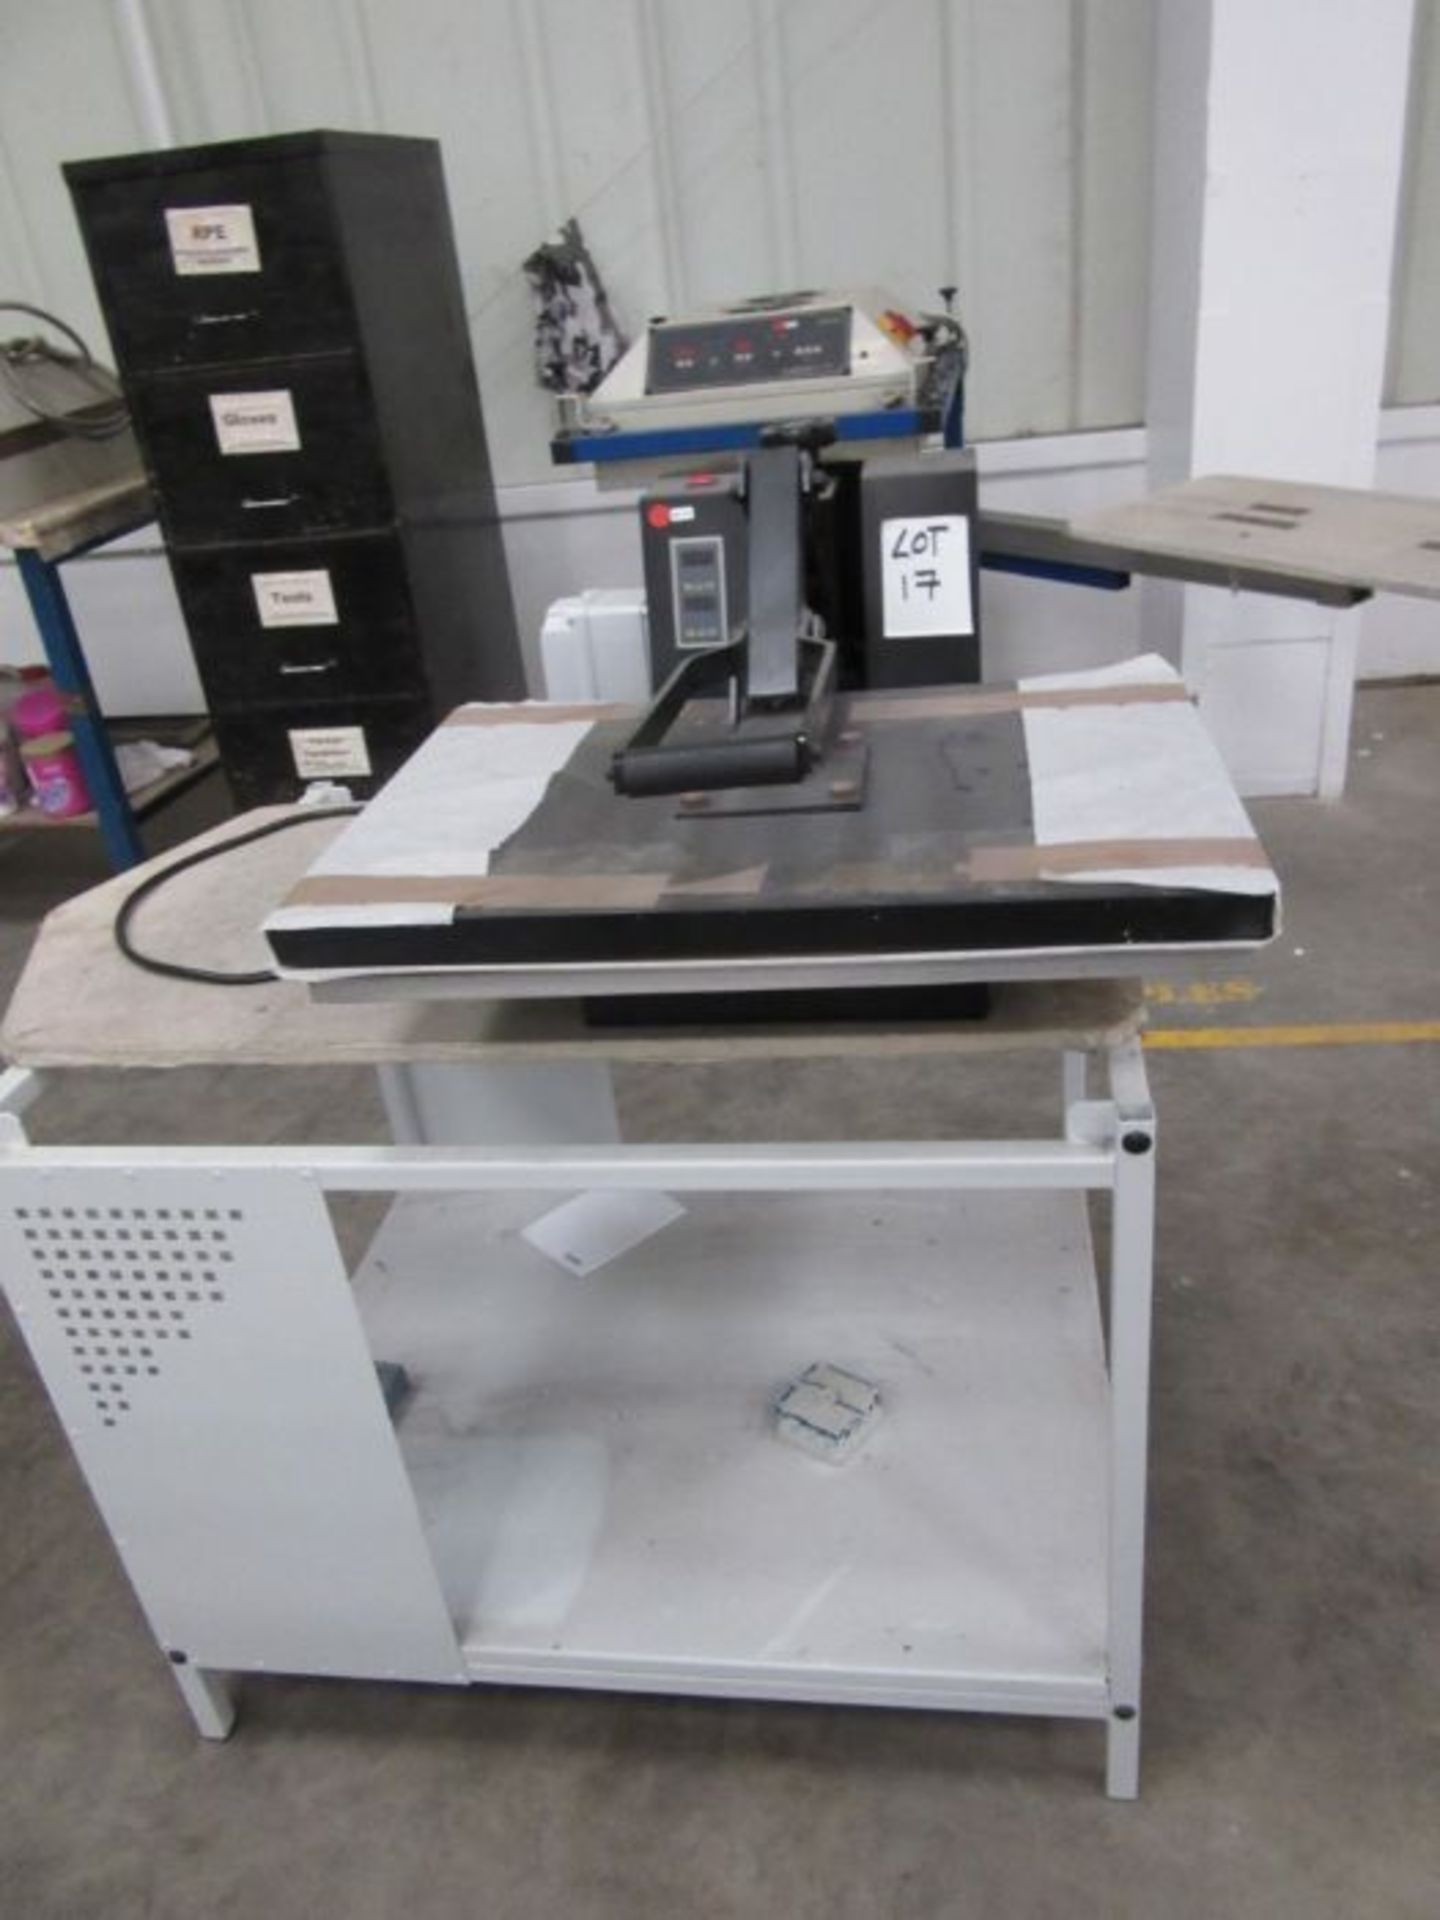 A heat press machine on stand